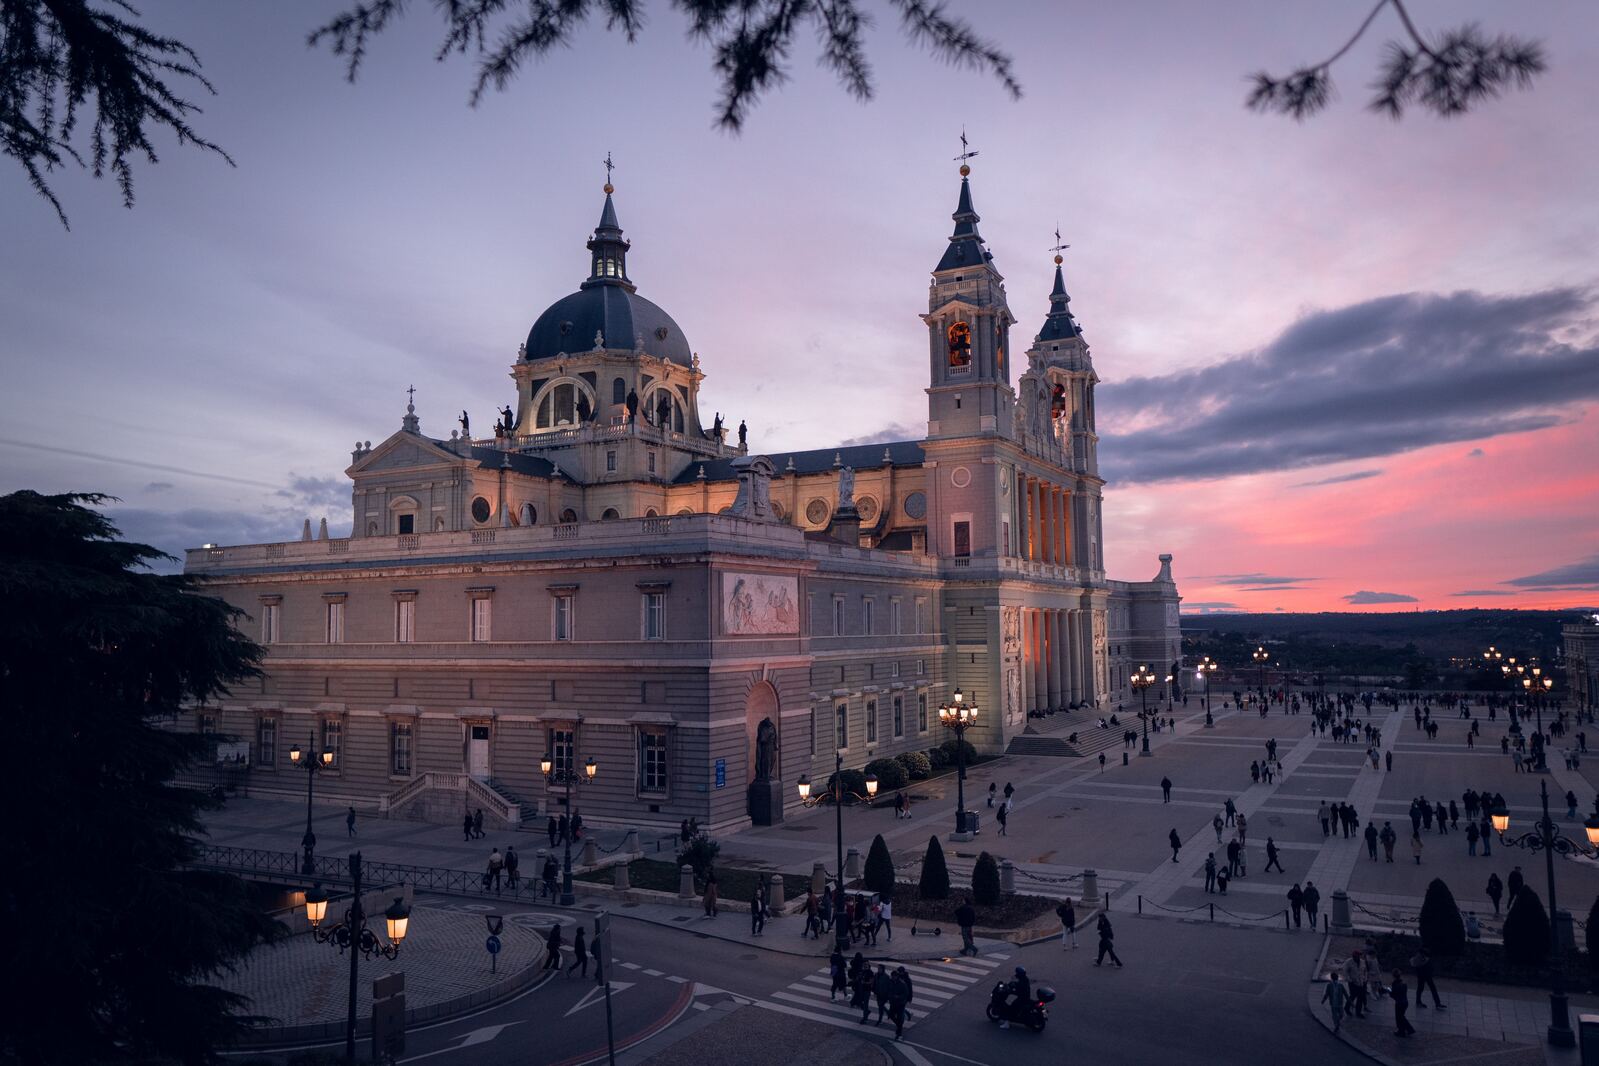 Image of Plaza de la Armeria by Team PhotoHound